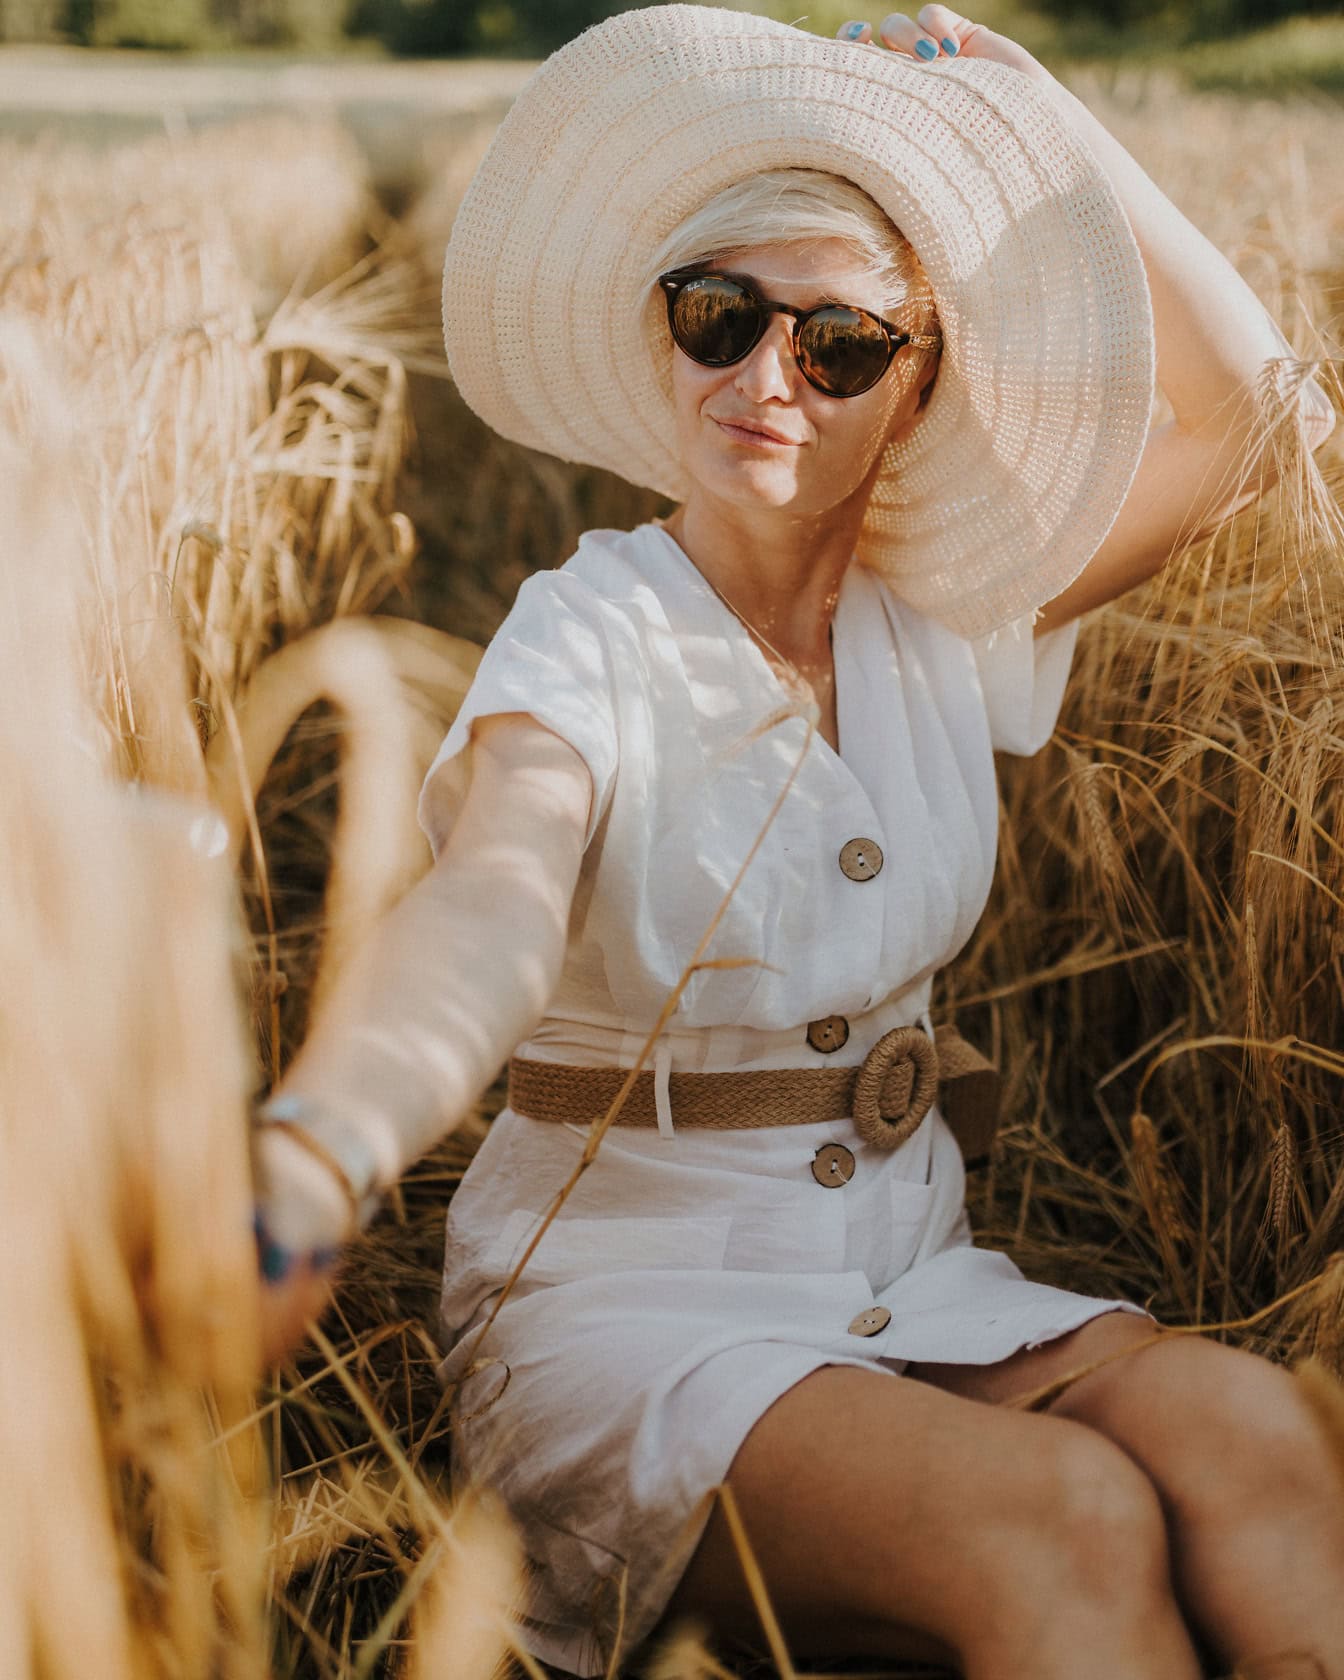 Wanita pirang glamor cantik dengan topi dan kacamata hitam berjemur di ladang gandum di akhir musim panas